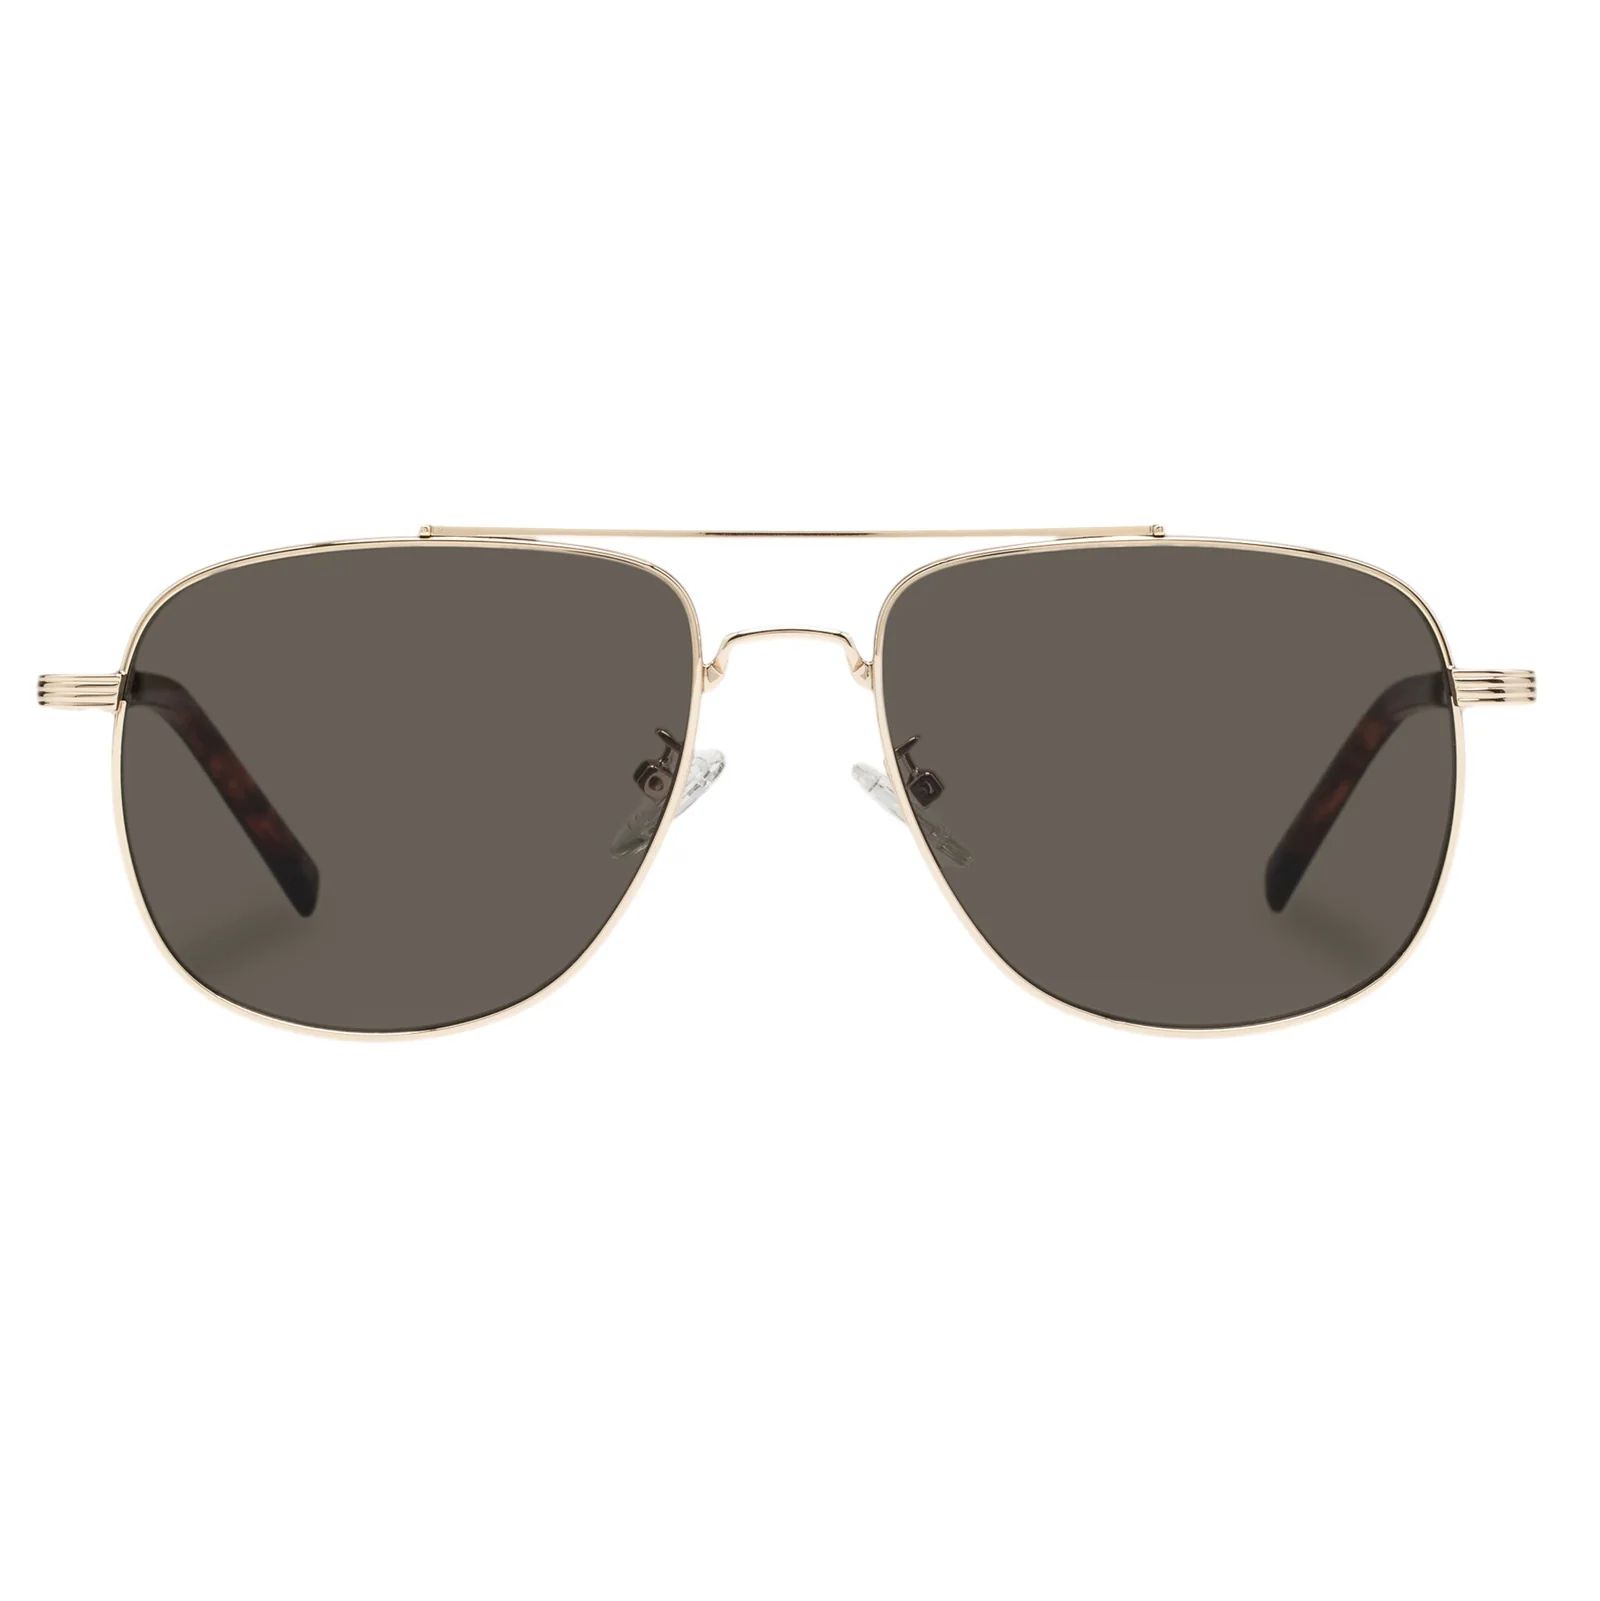 THE CHARMER | GOLD KHAKI MONO | Le Specs (Sunglasses)